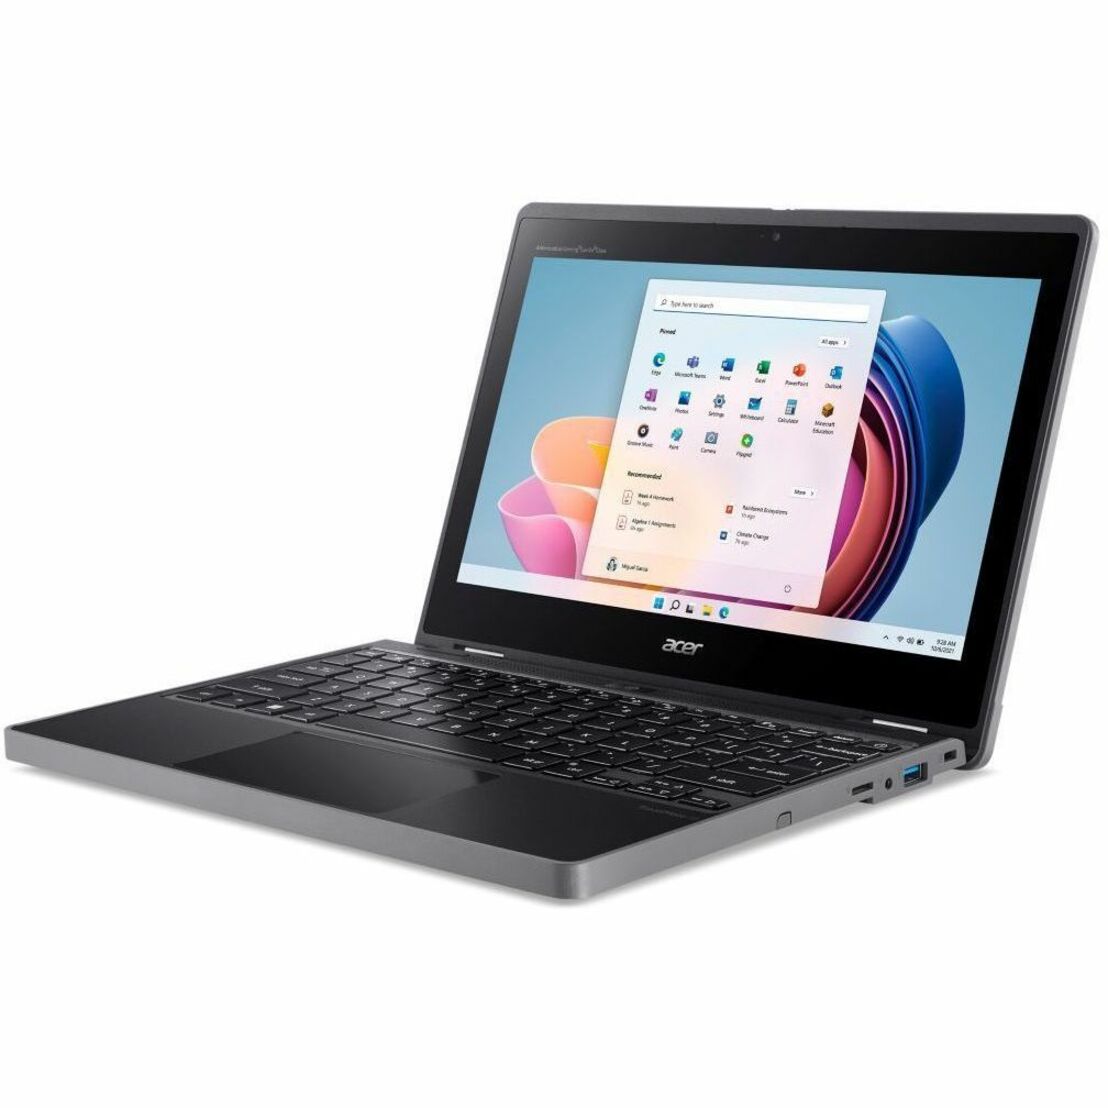 Acer (NXVZ0AA007) Notebooks (NX.VZ0AA.007)